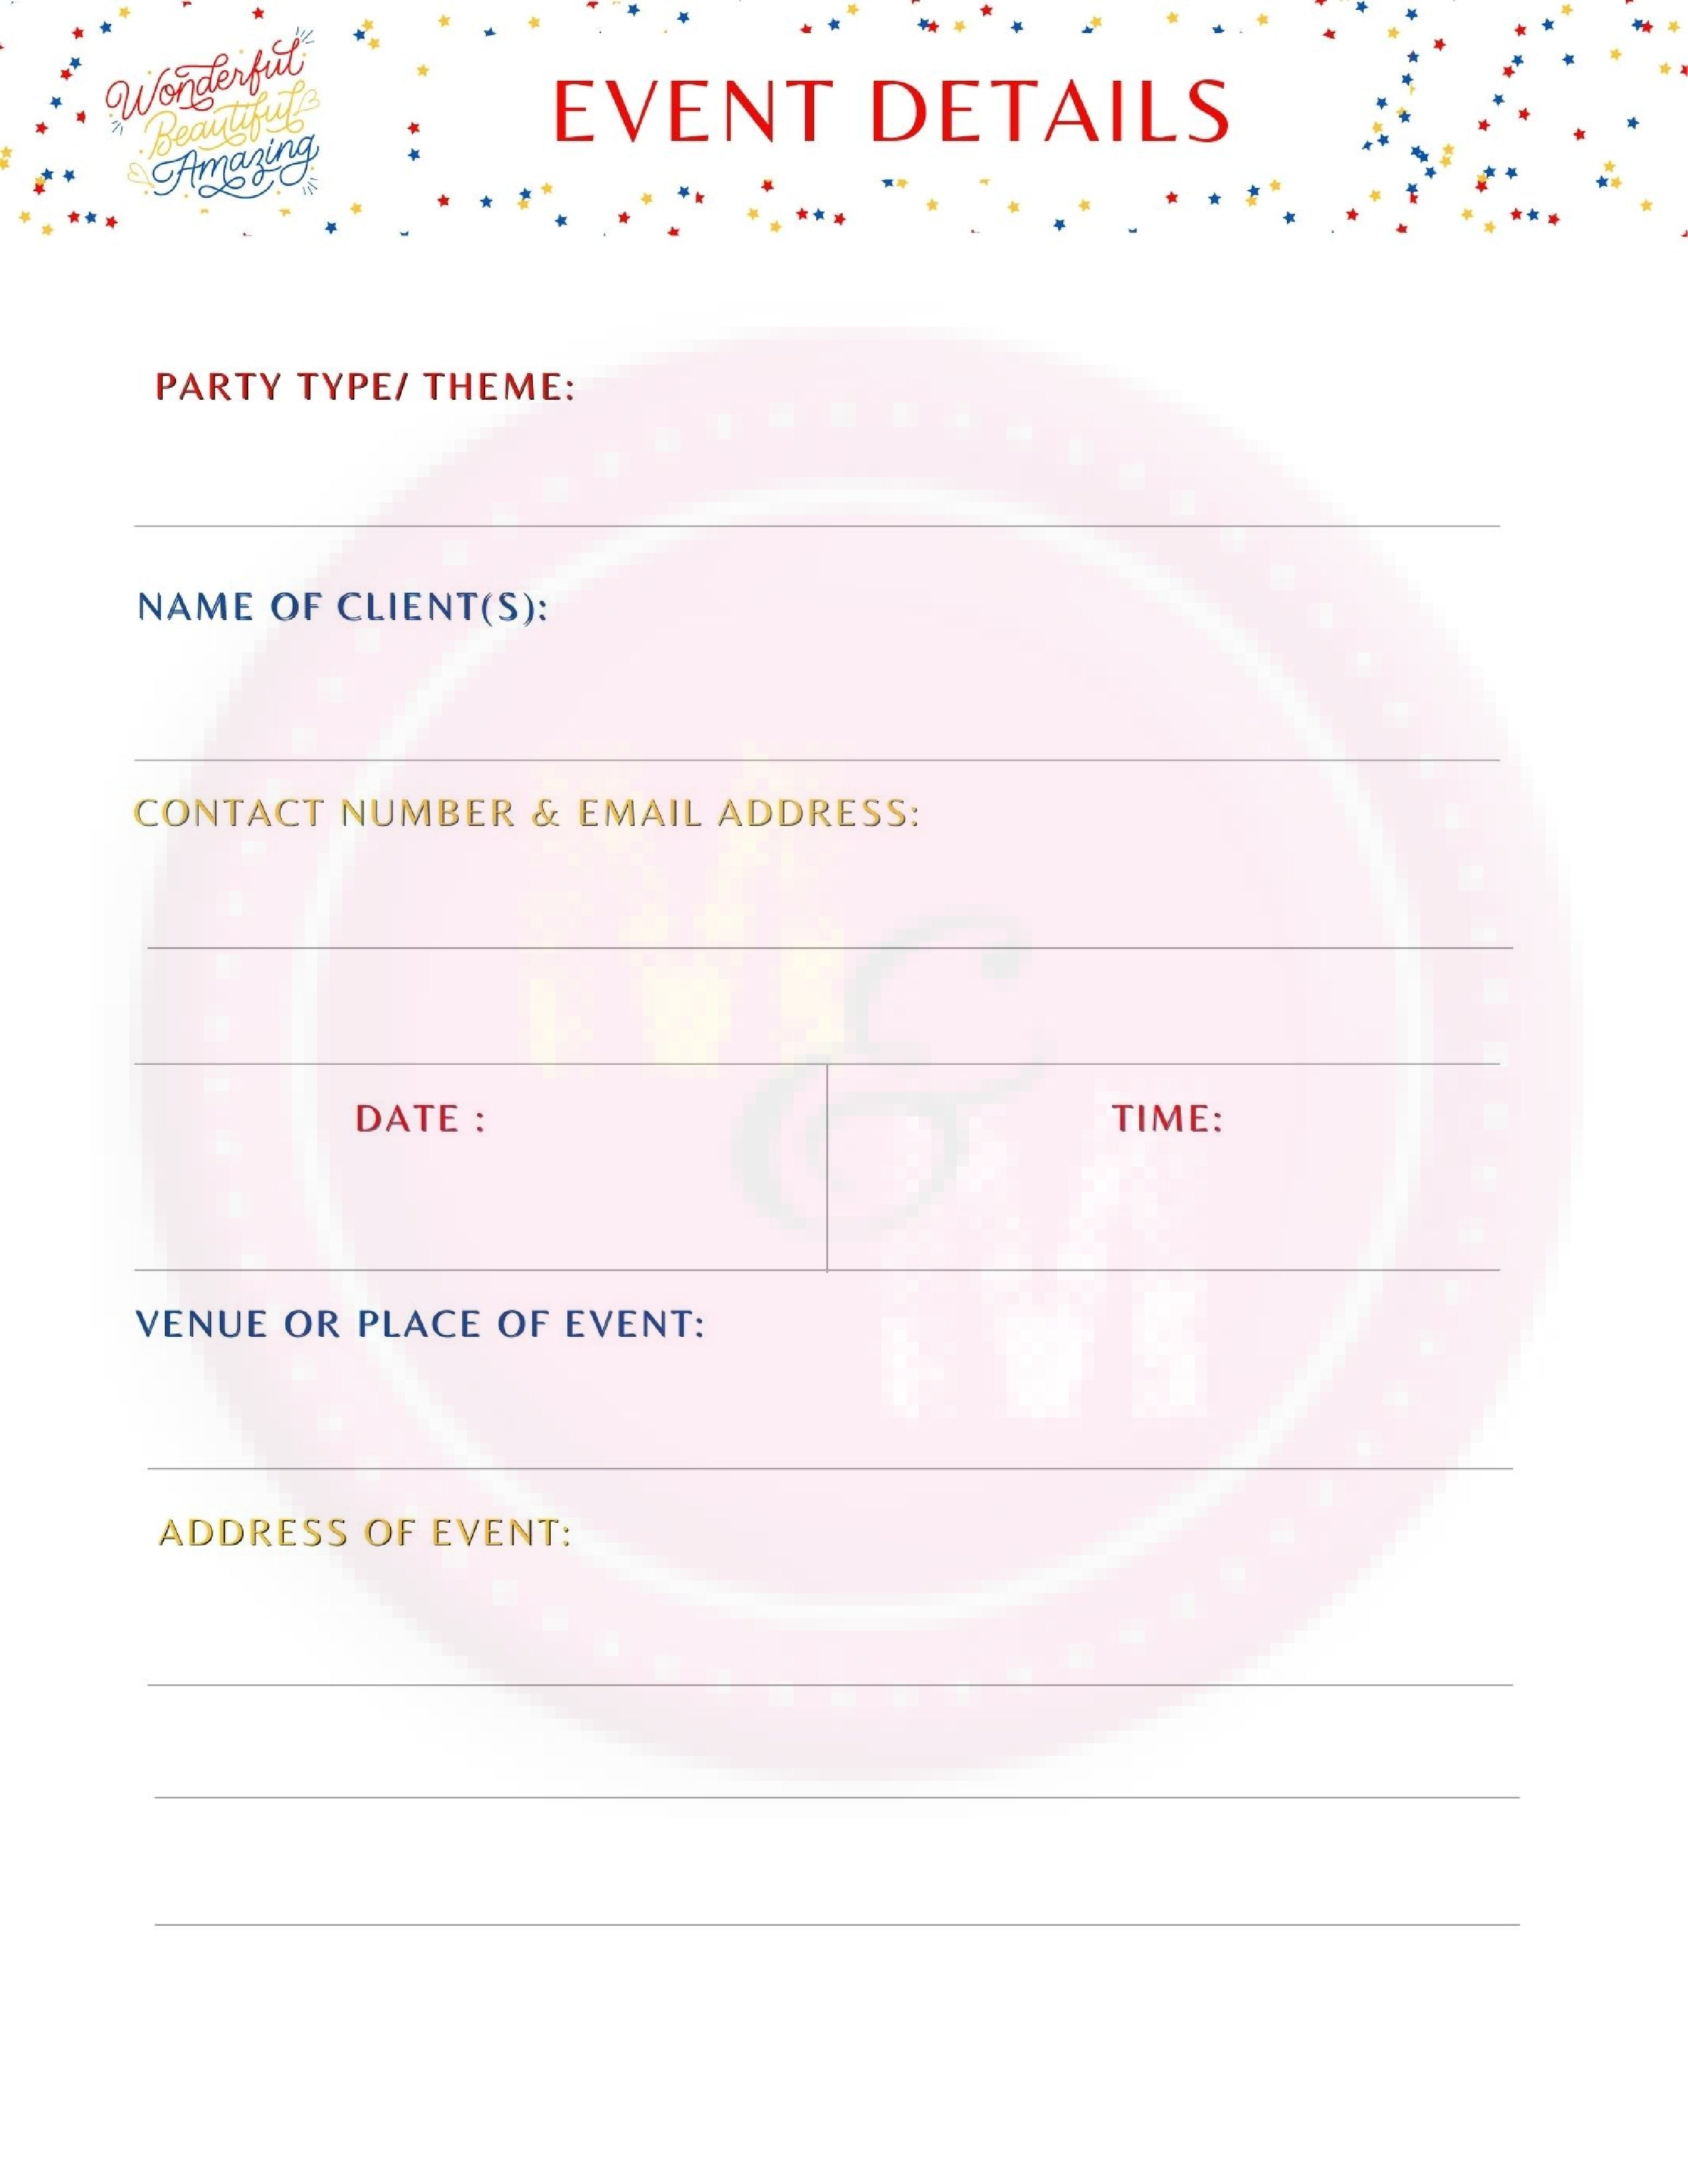 Woman of Wonder Party Event Planner | Superhero Themed Planner Printables Bundle | Event Planner Templates